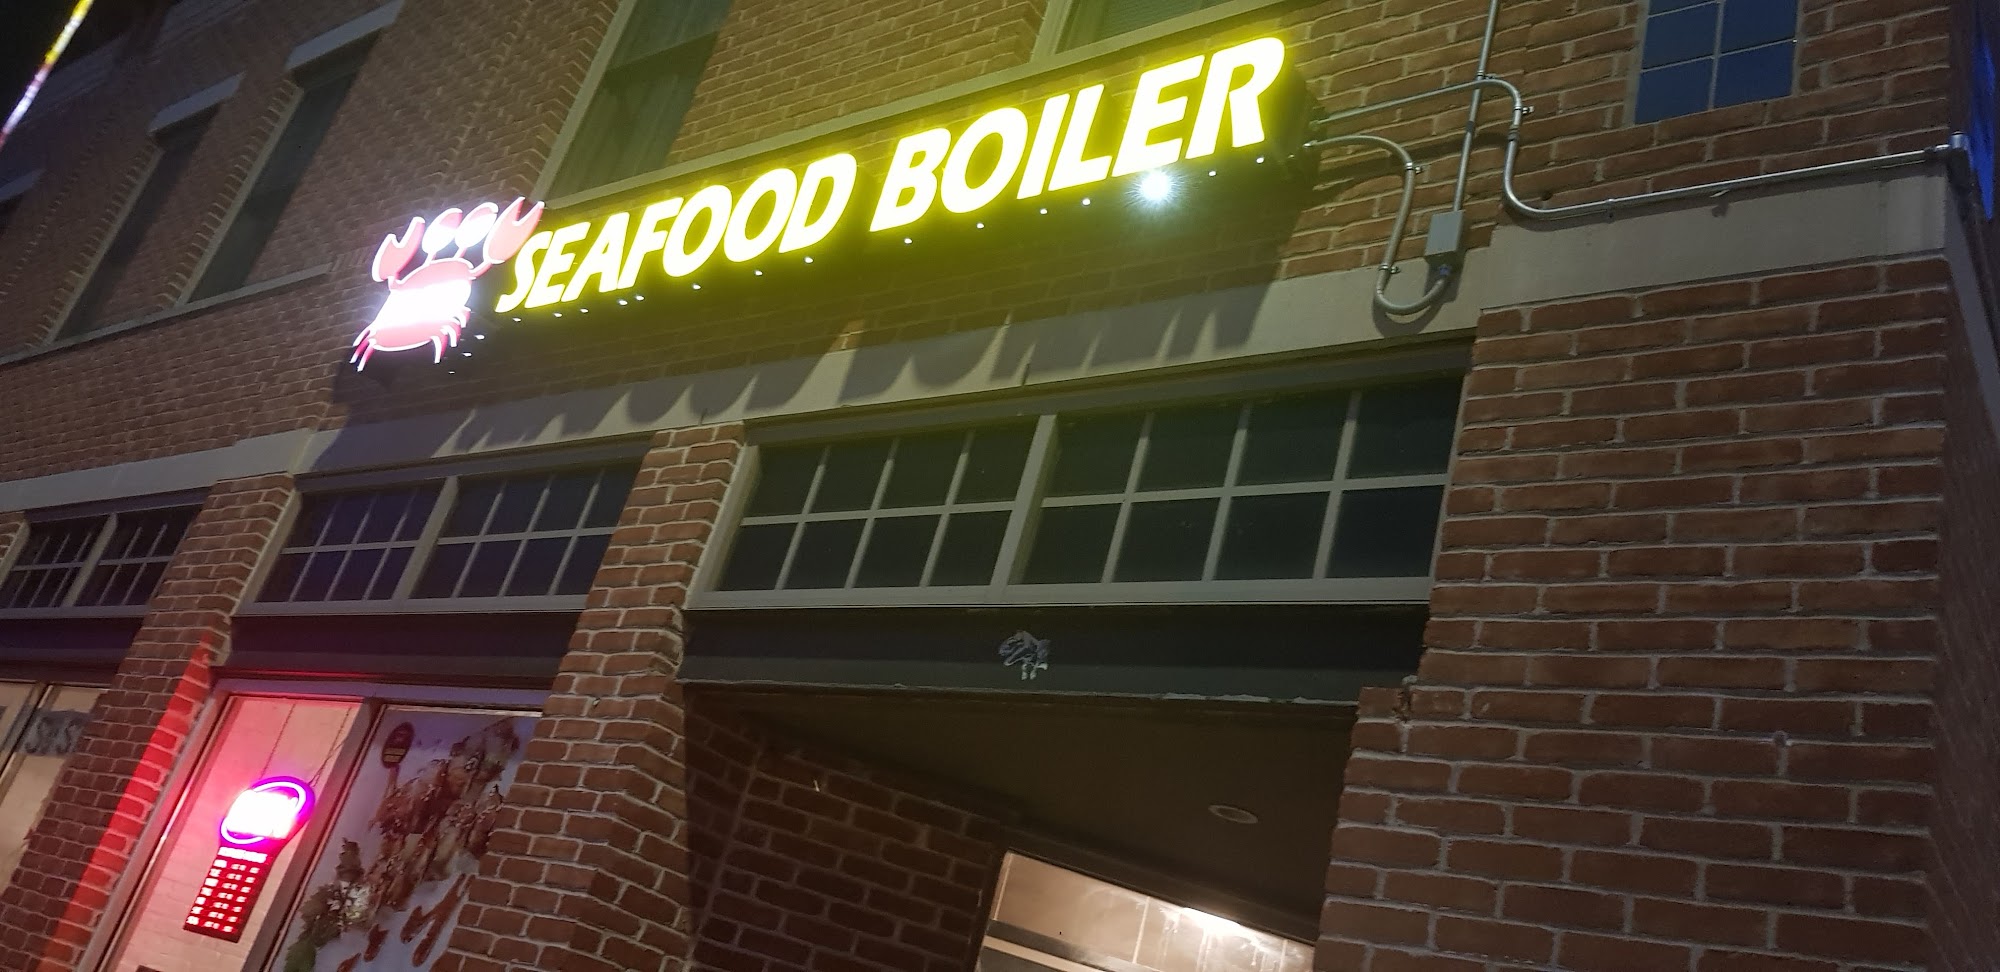 Mad Seafood Boiler